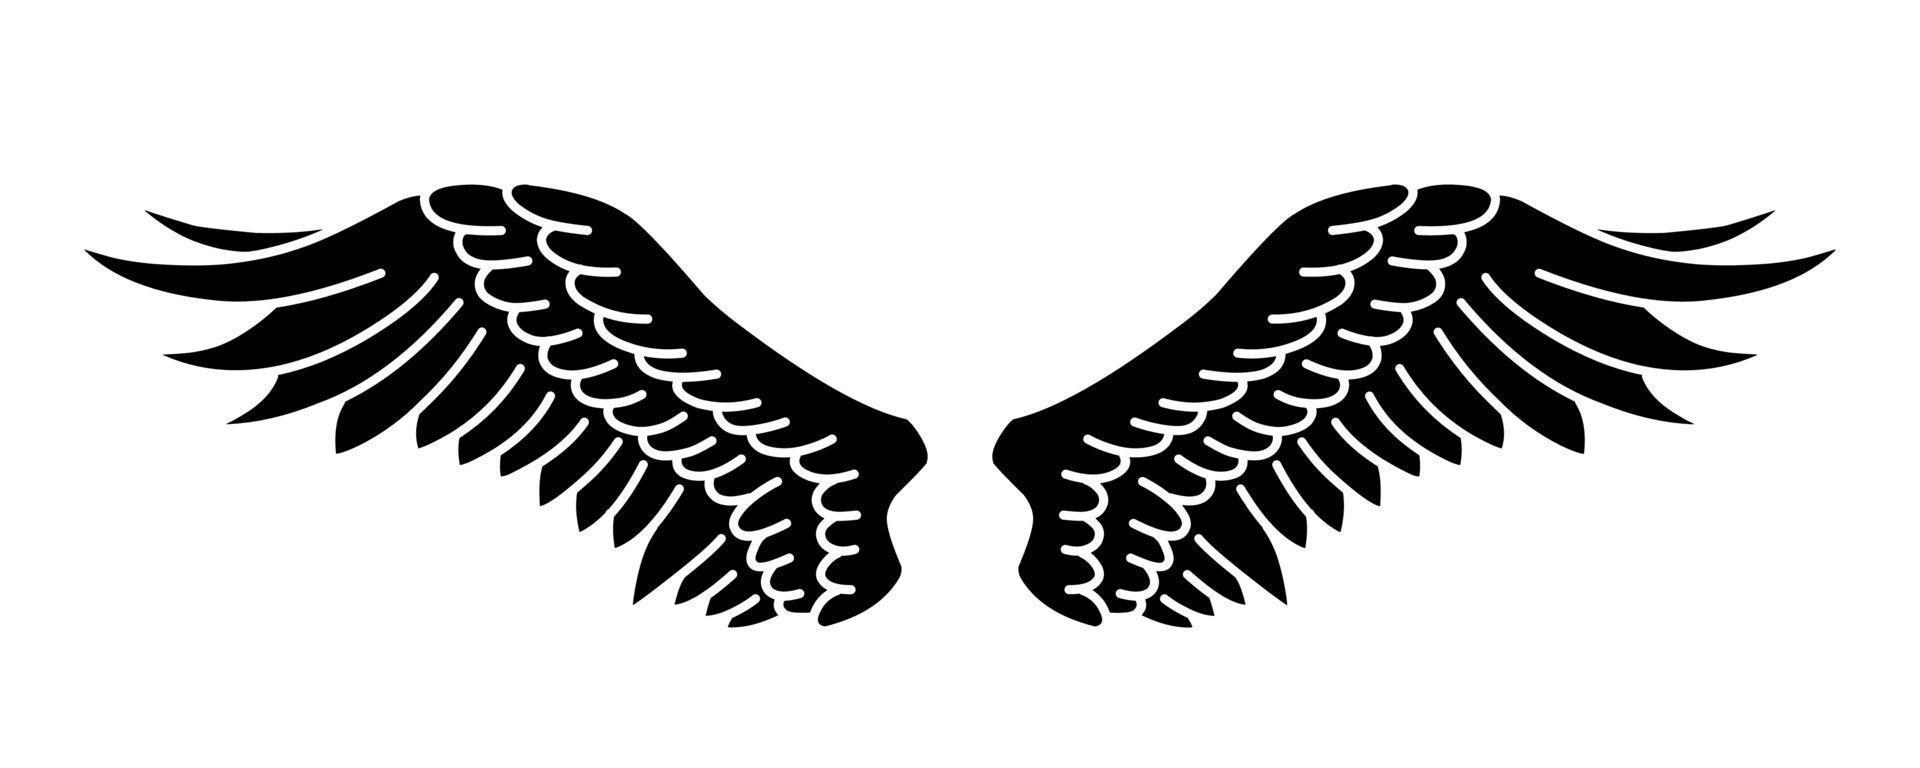 Free vector angel wings tribal tattoo